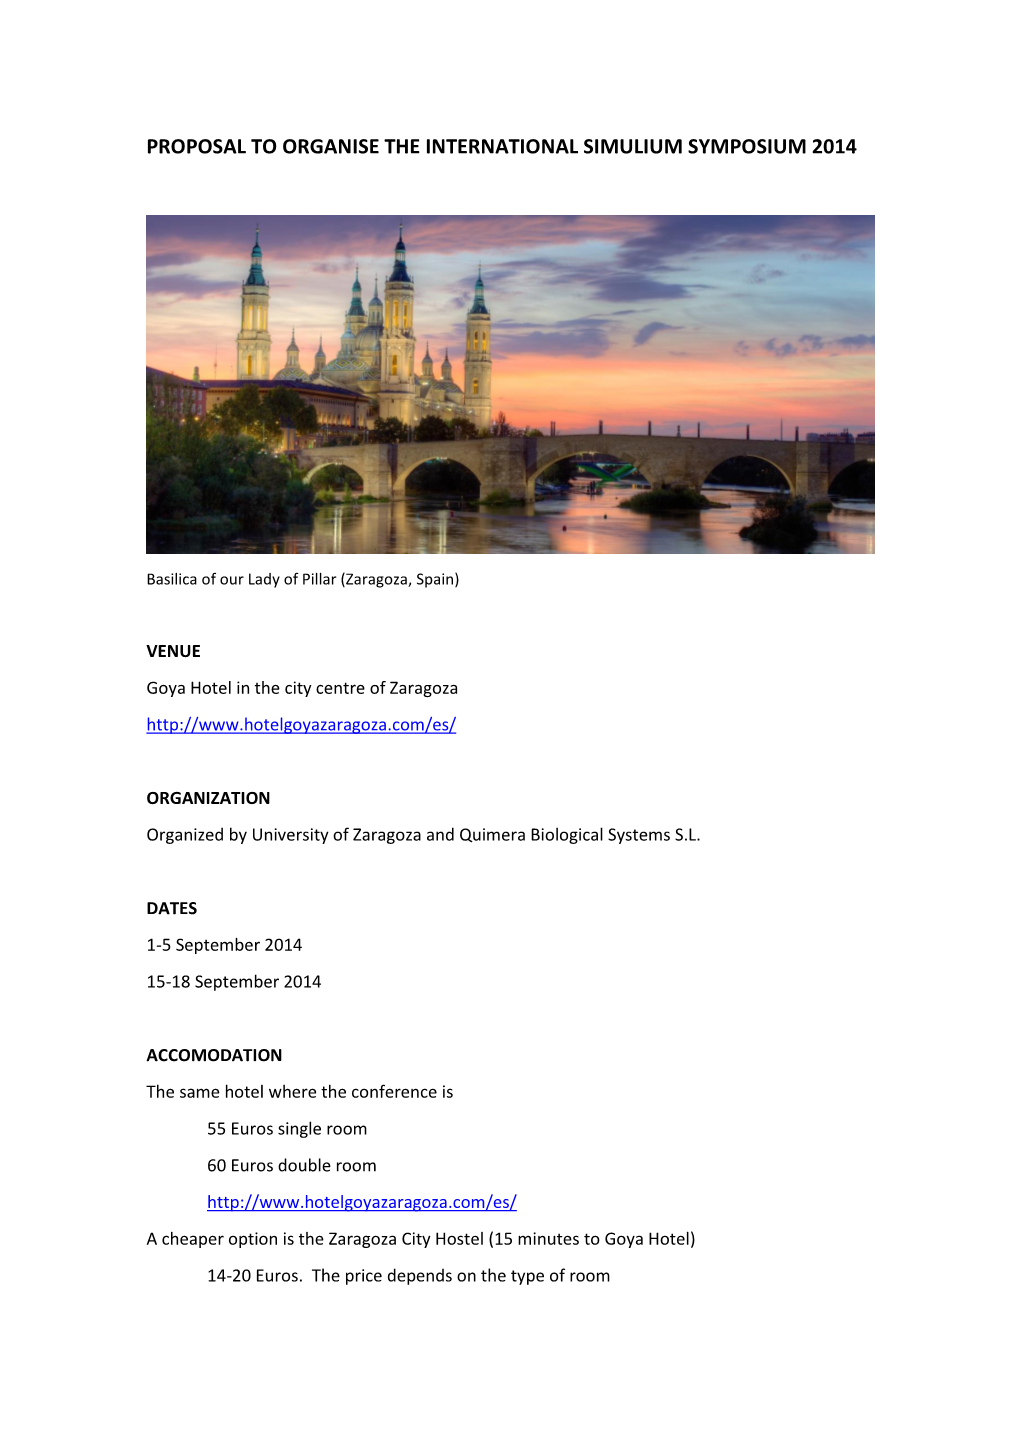 Proposal to Organise the International Simulium Symposium 2014